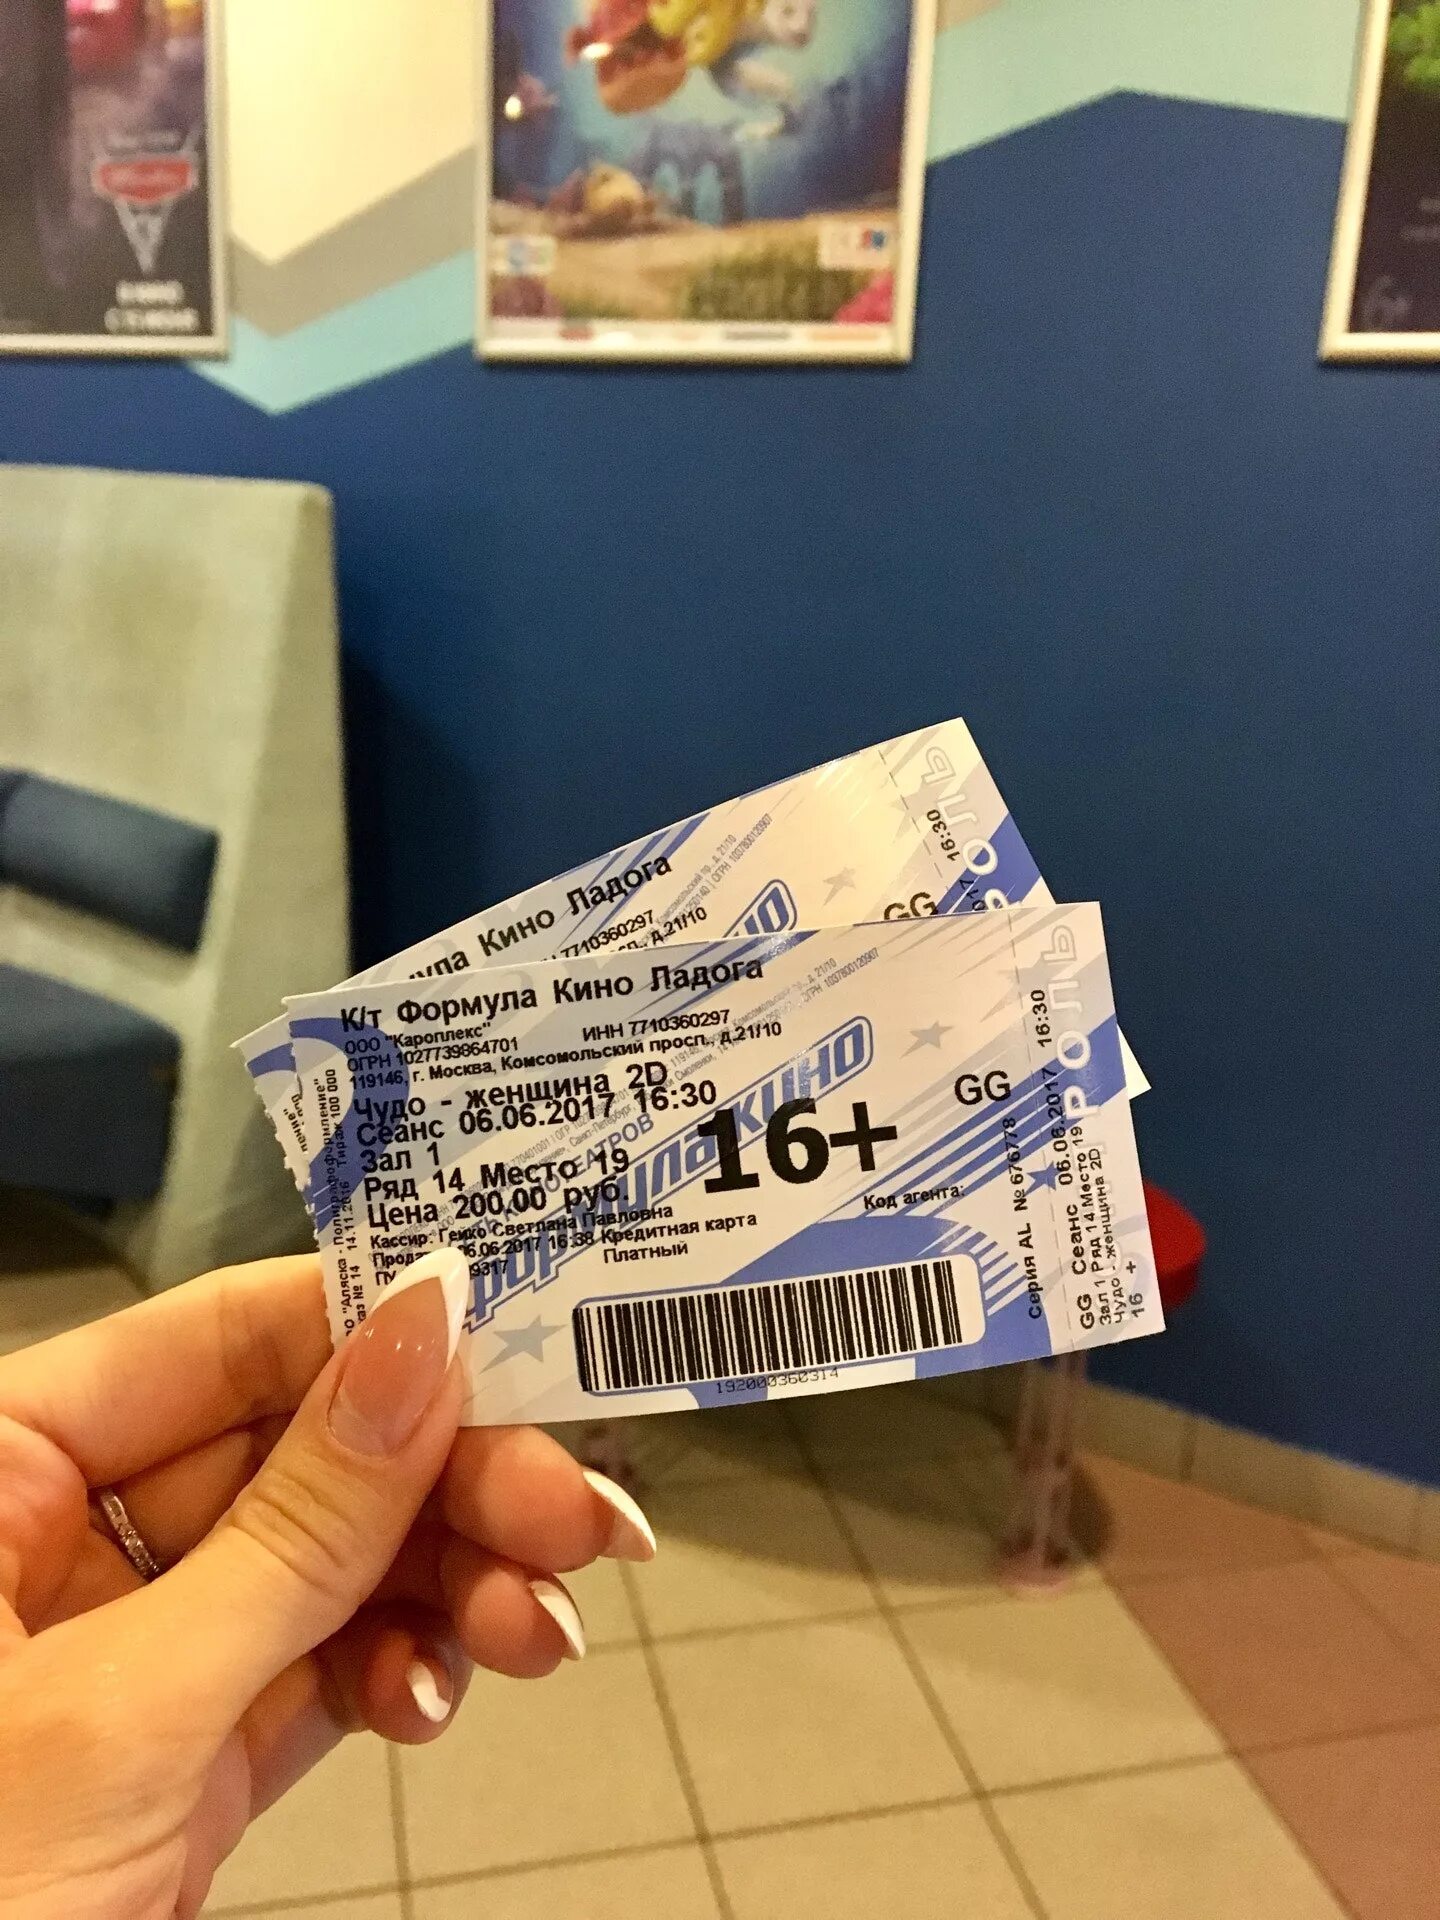 Кинотеатр формула билеты. Билет в кинотеатр. Билеты из кинотеатра.